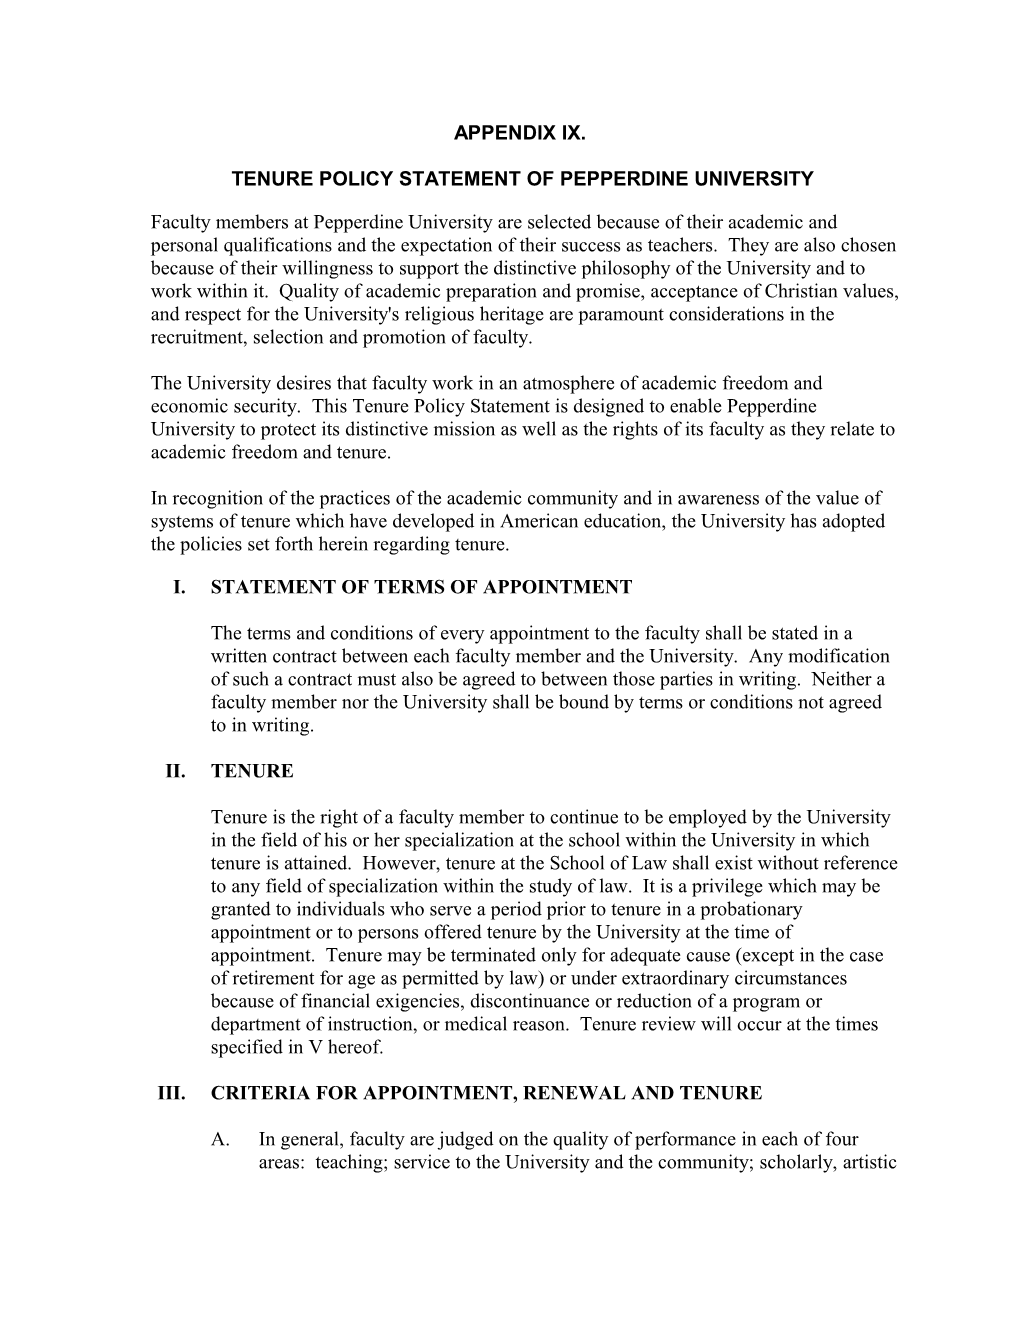 Tenure Policy Statement of Pepperdine University